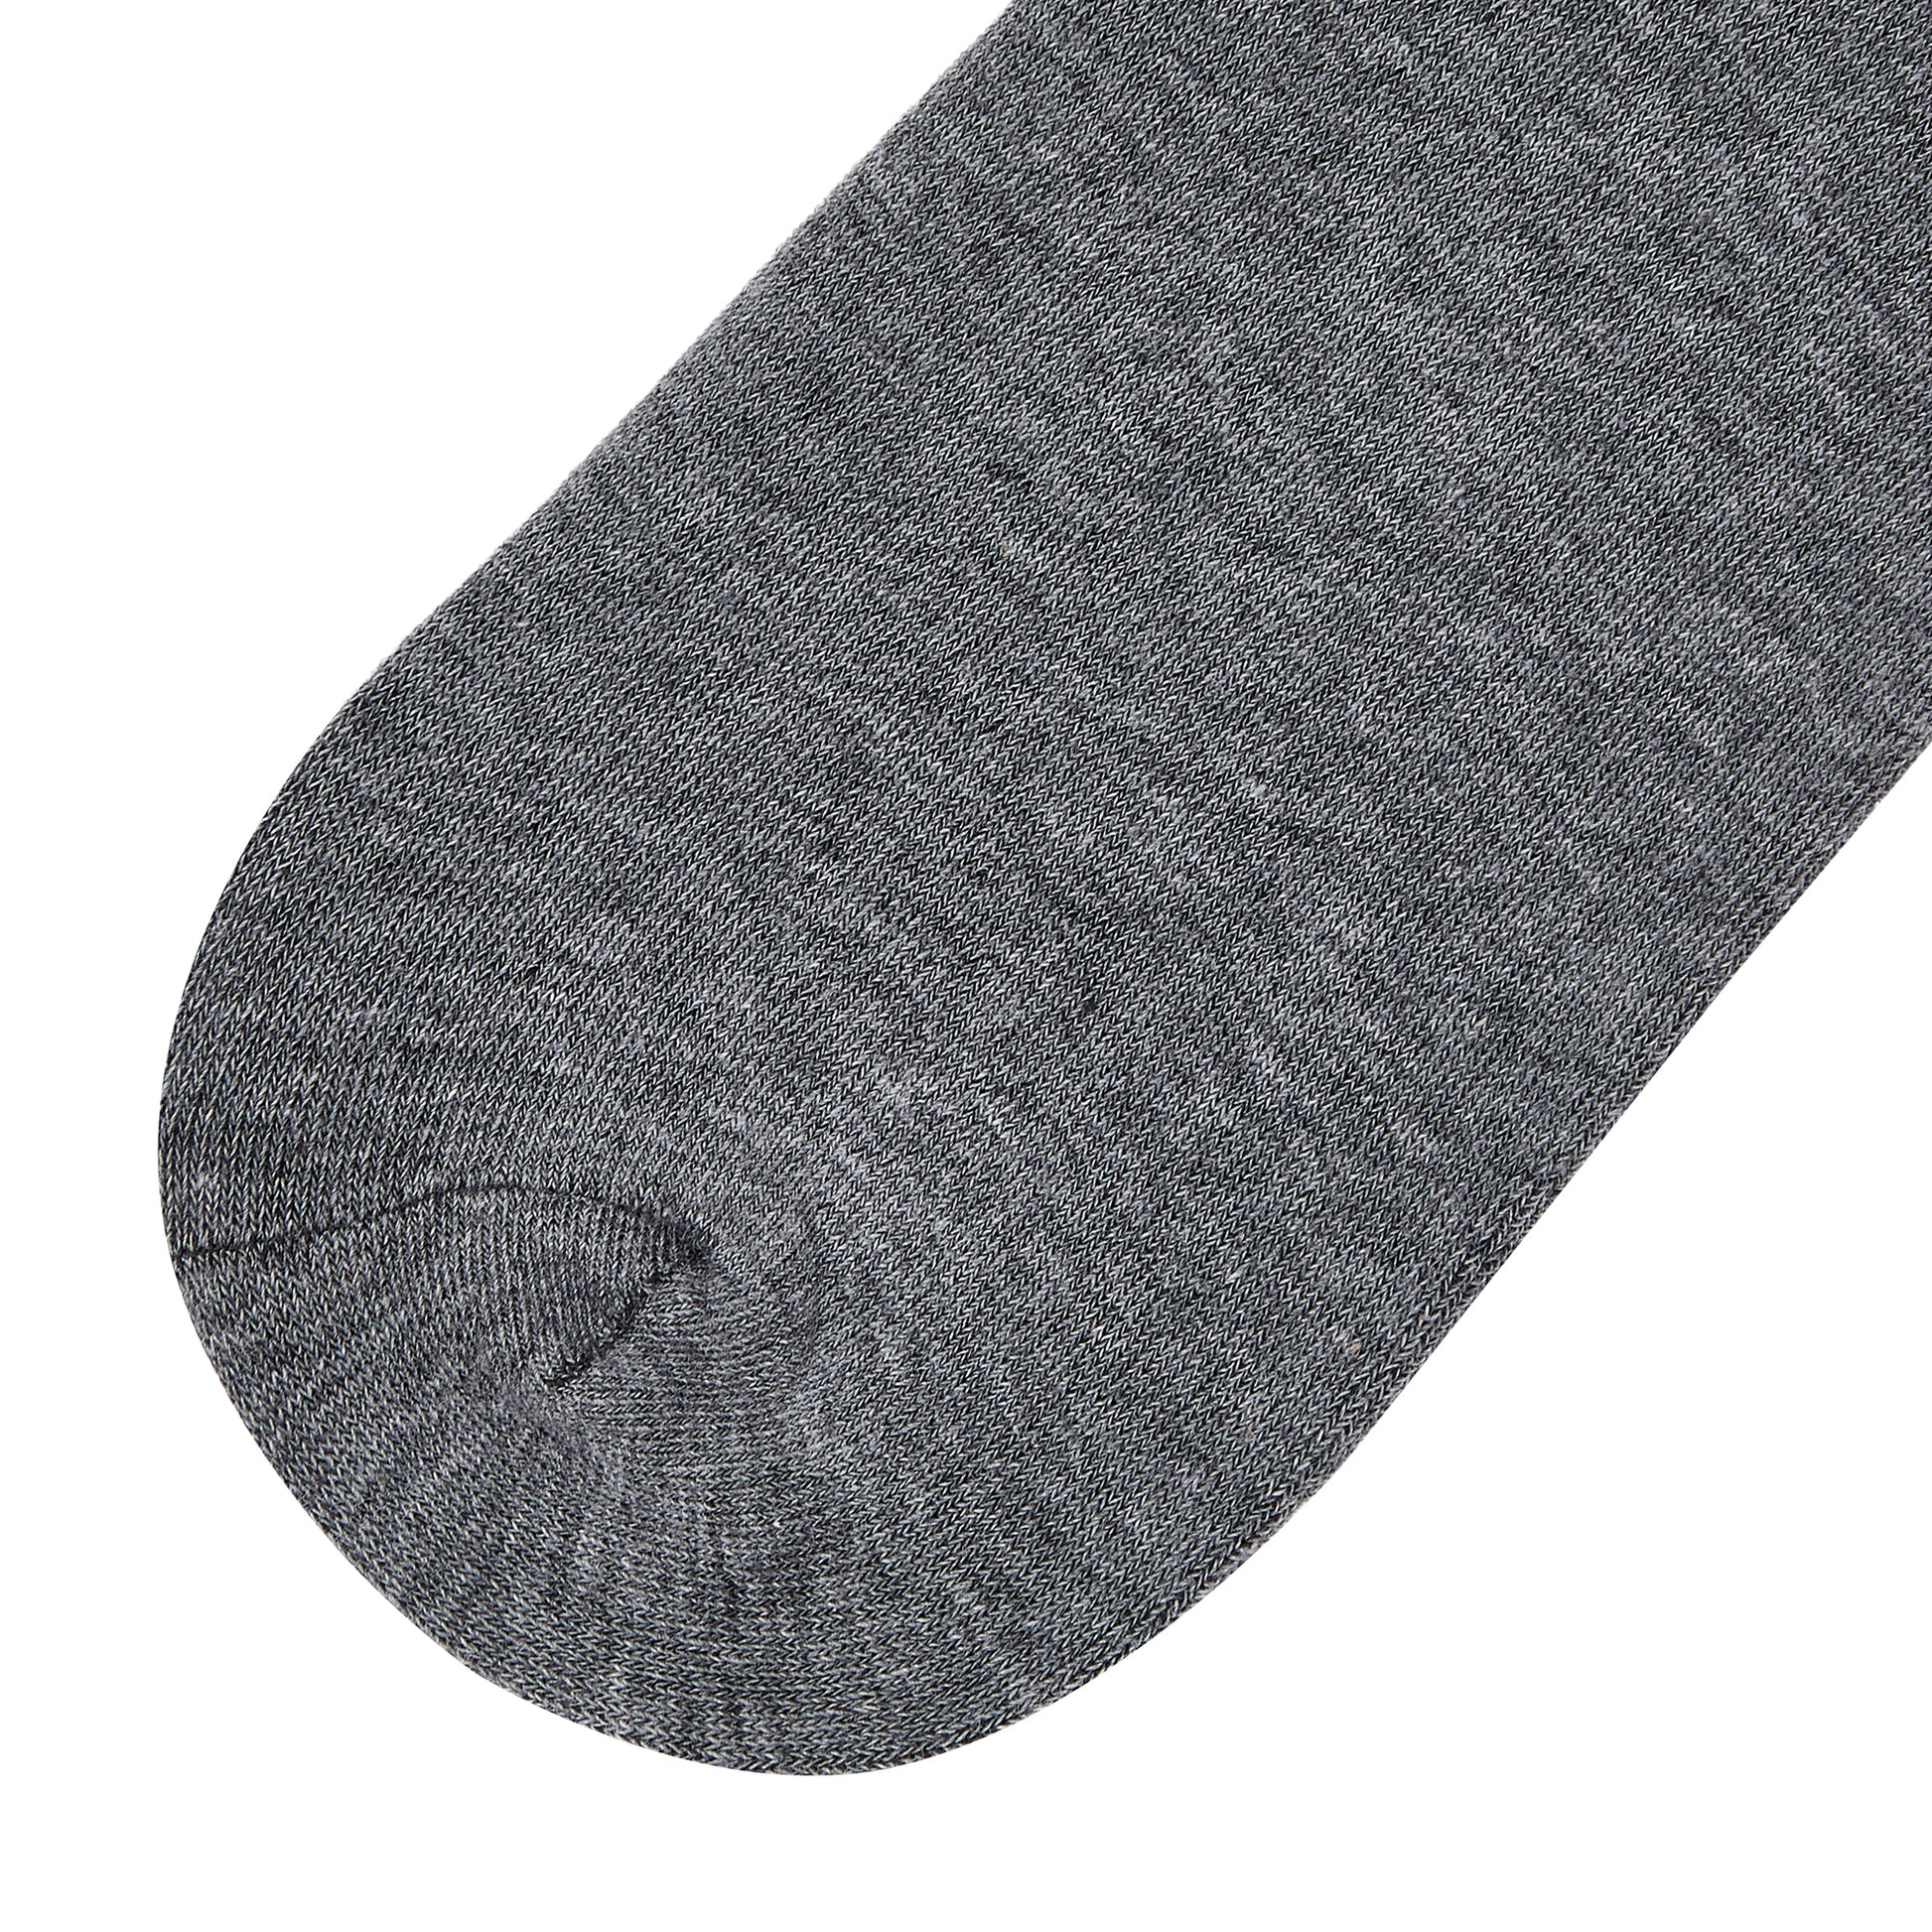 Mens Plain Ankle Length Cotton Socks - IDENTITY Apparel Shop